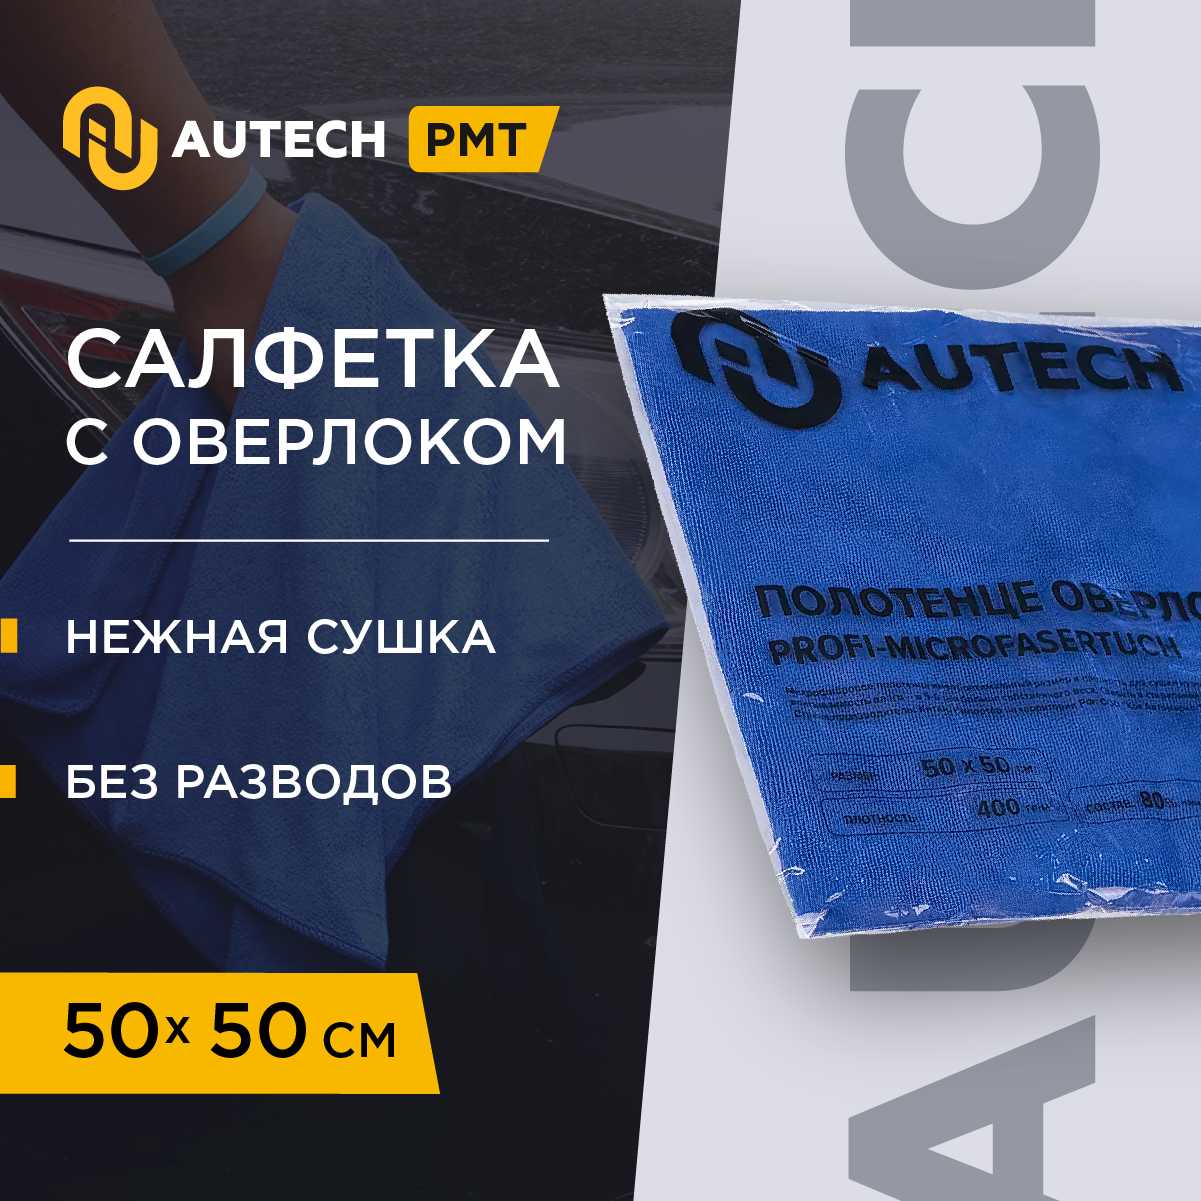 AuTech | PROFI-MICROFASERTUCH - Автополотенце  микрофибра для сушки авто. 50*50 см